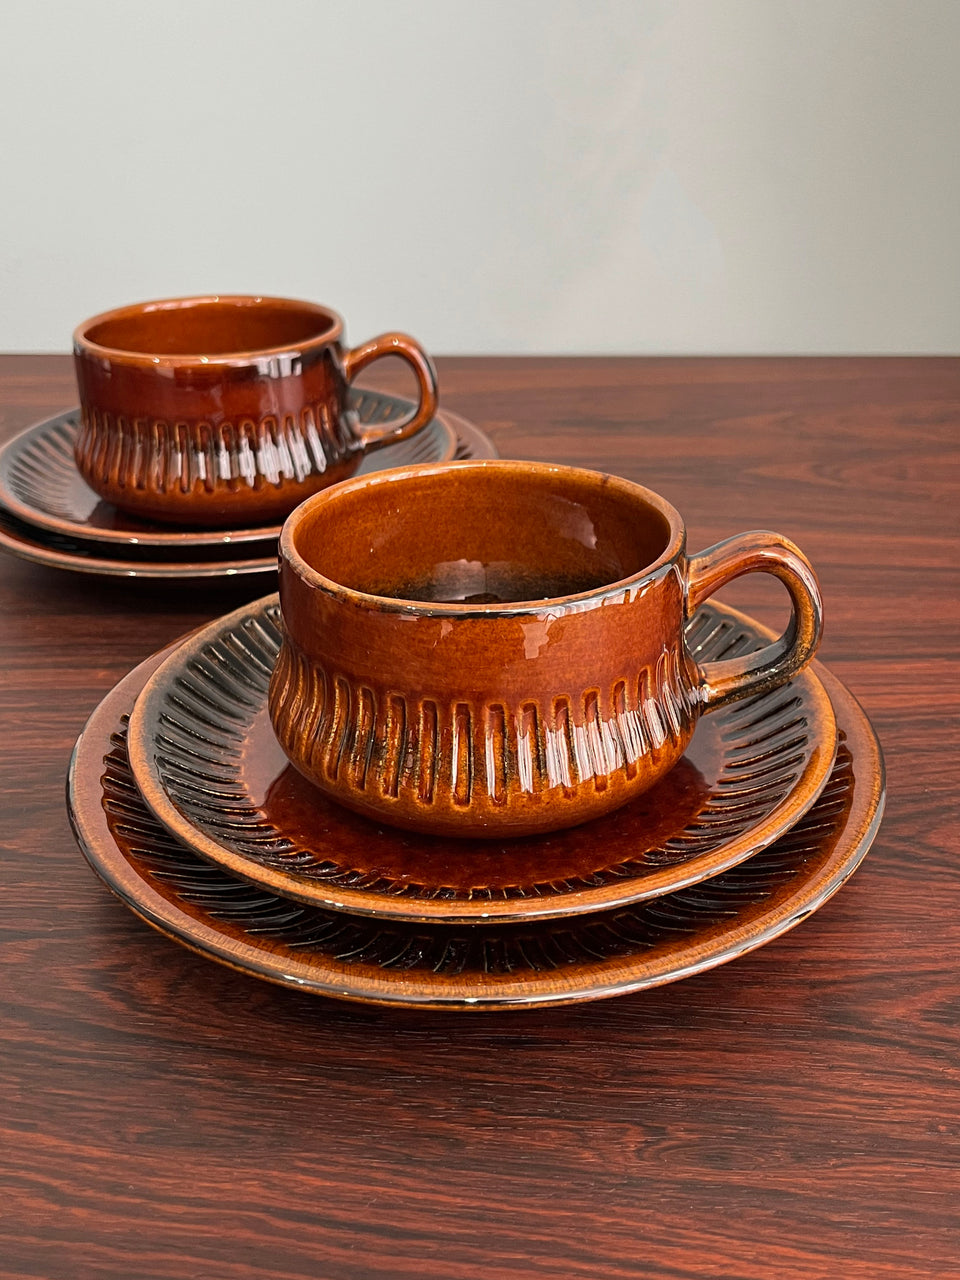 Gefle Kaskad Tea Cup and Saucer Plate Swedish Vintage/ゲフレ カスケード ティーカップ&ソーサー 北欧ヴィンテージ食器